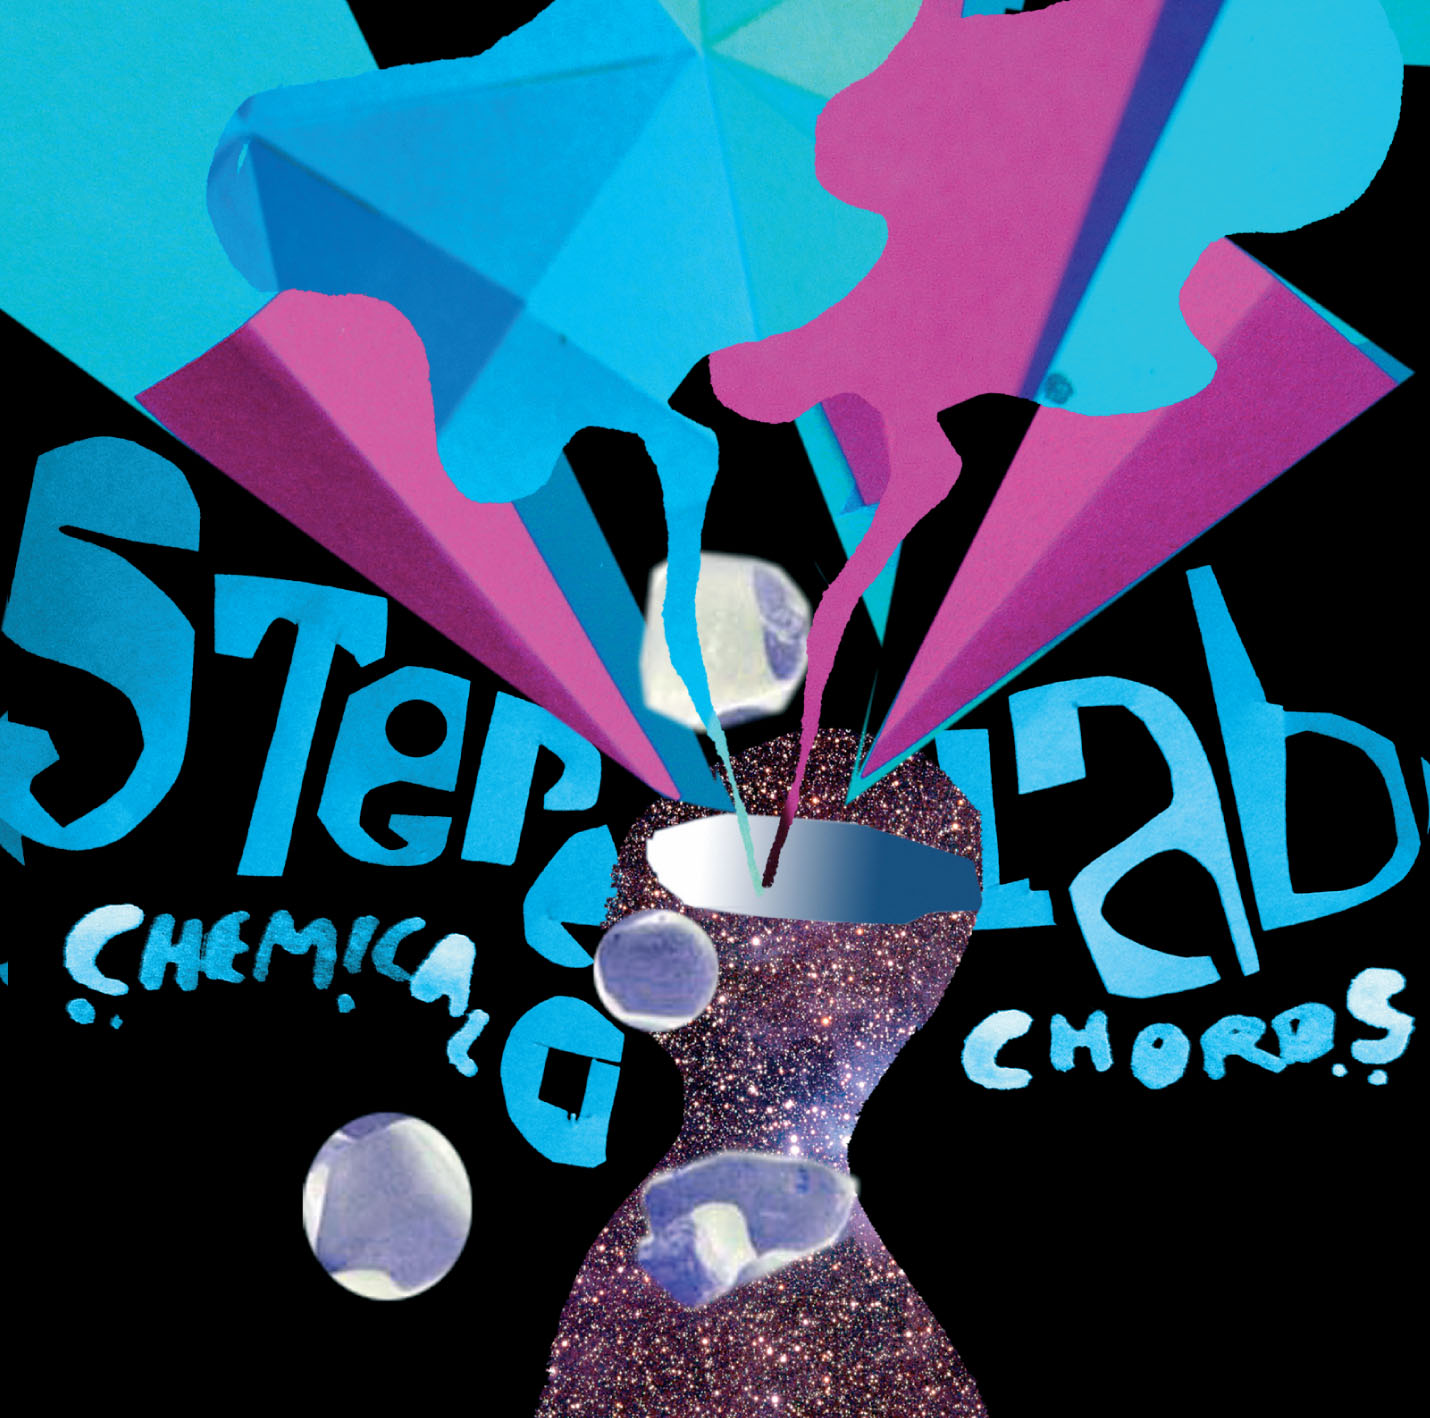 Stereolab - Chemical Chords - CD